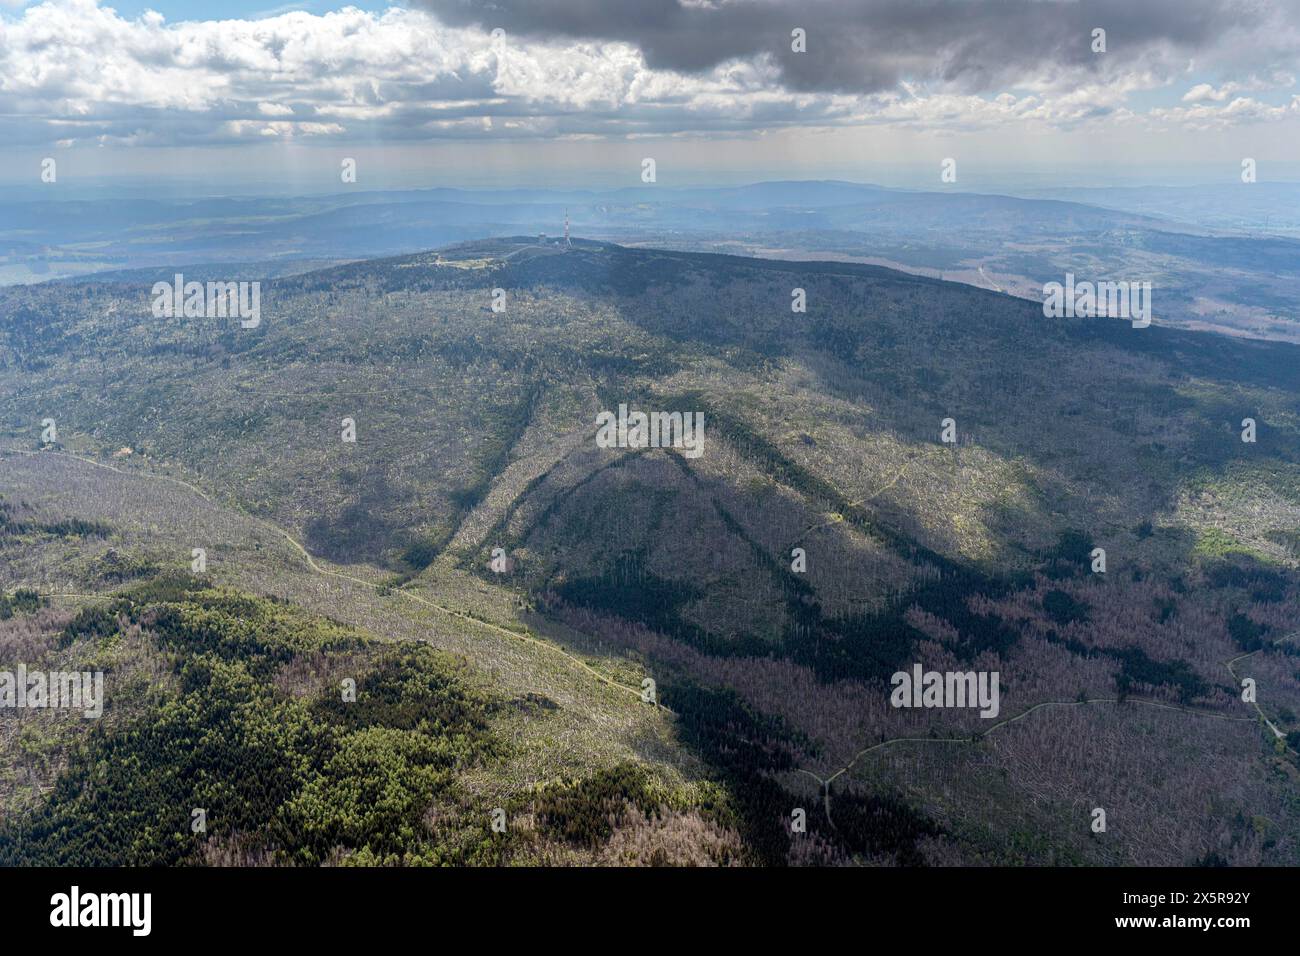 Foto aerea, Harz Mountains con Brocken, foresta dieback Foto Stock